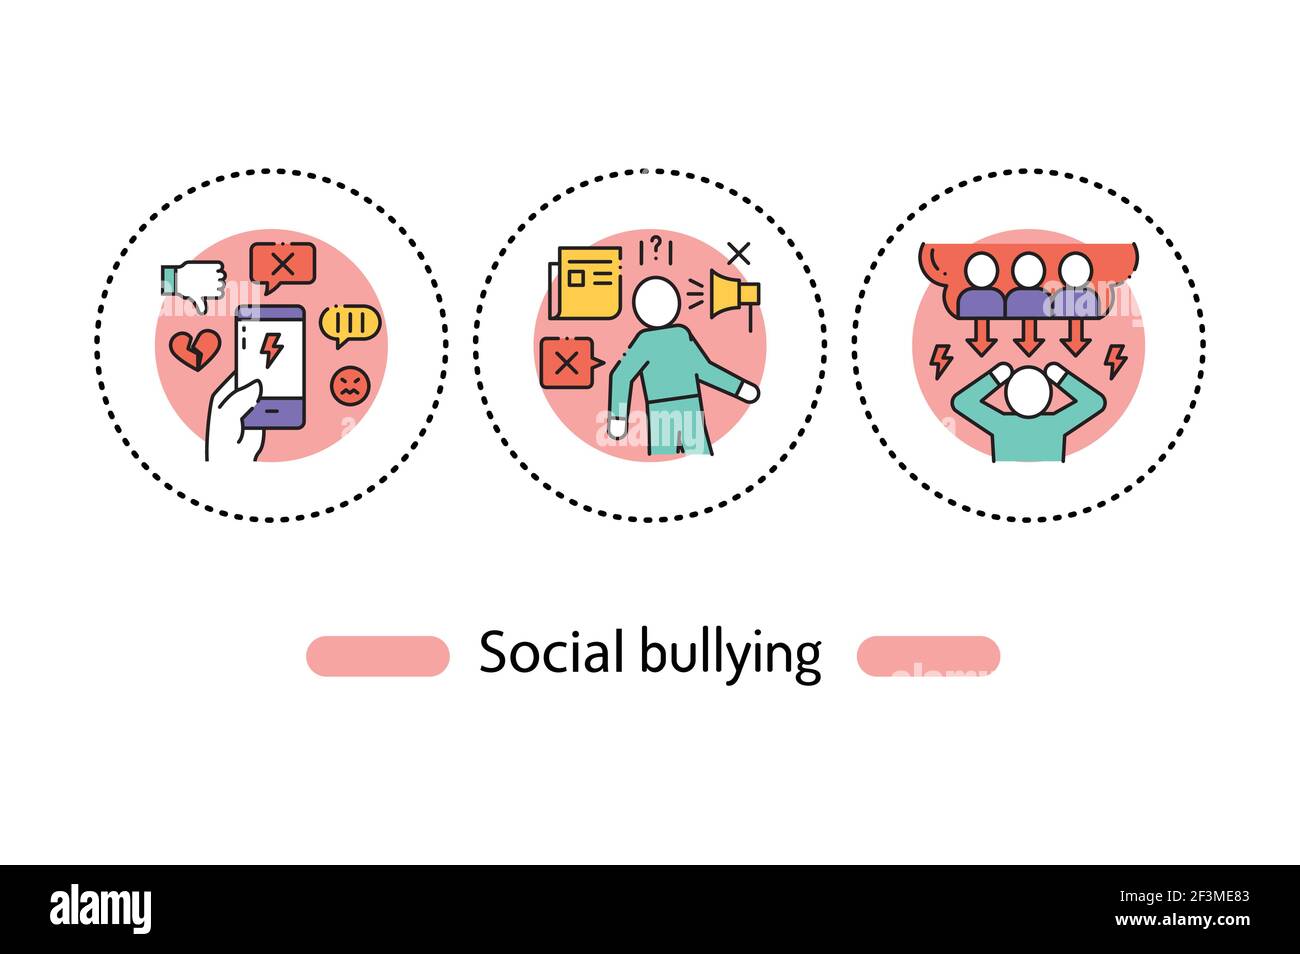 social bullying clipart